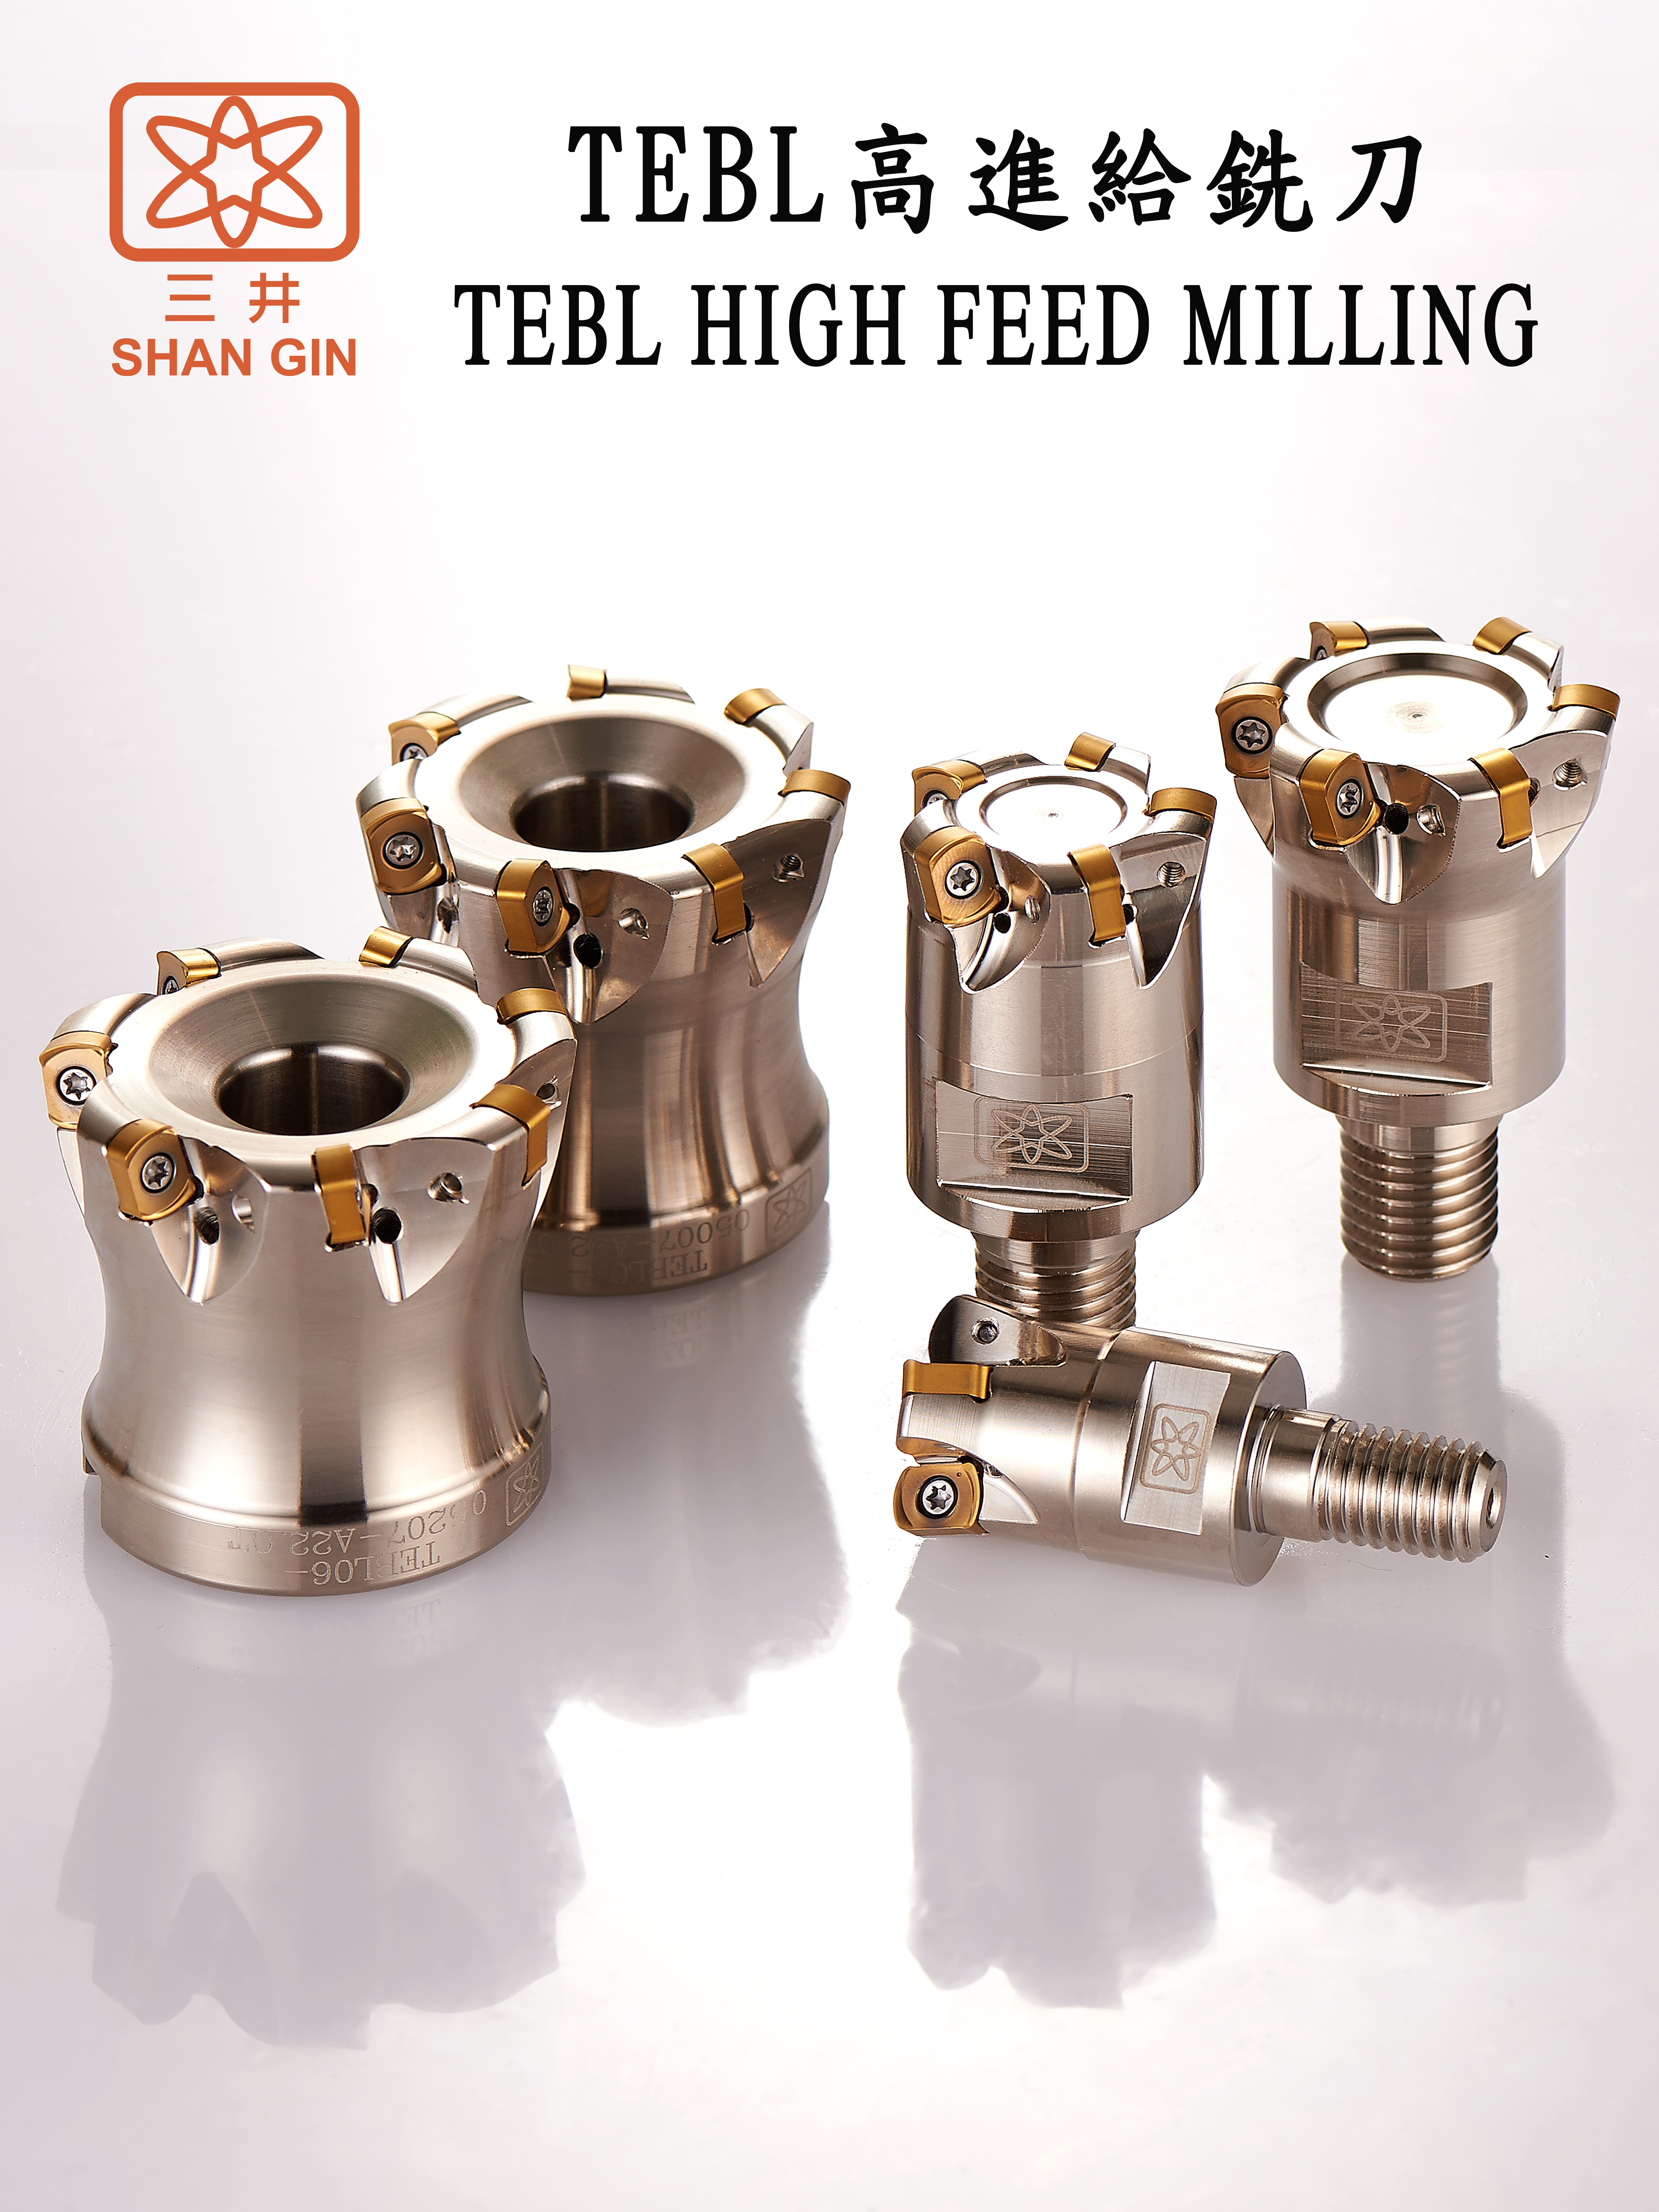 Catalog|TEBL HIGH FEED MILLING